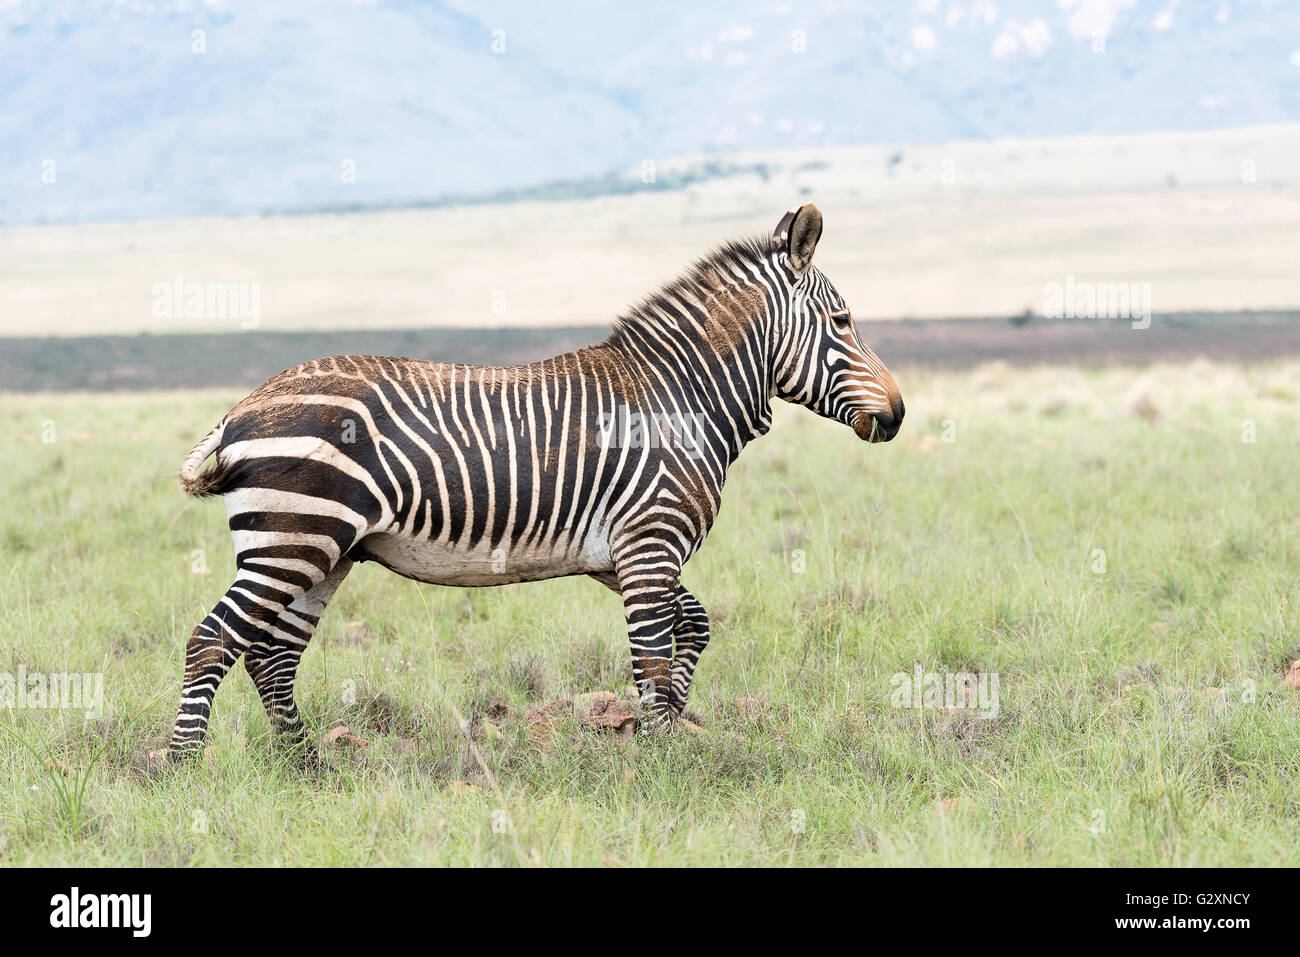 A mountain zebra, Equus zebra zebra, partially covered in dried mud near Cradock in South Africa Stock Photo